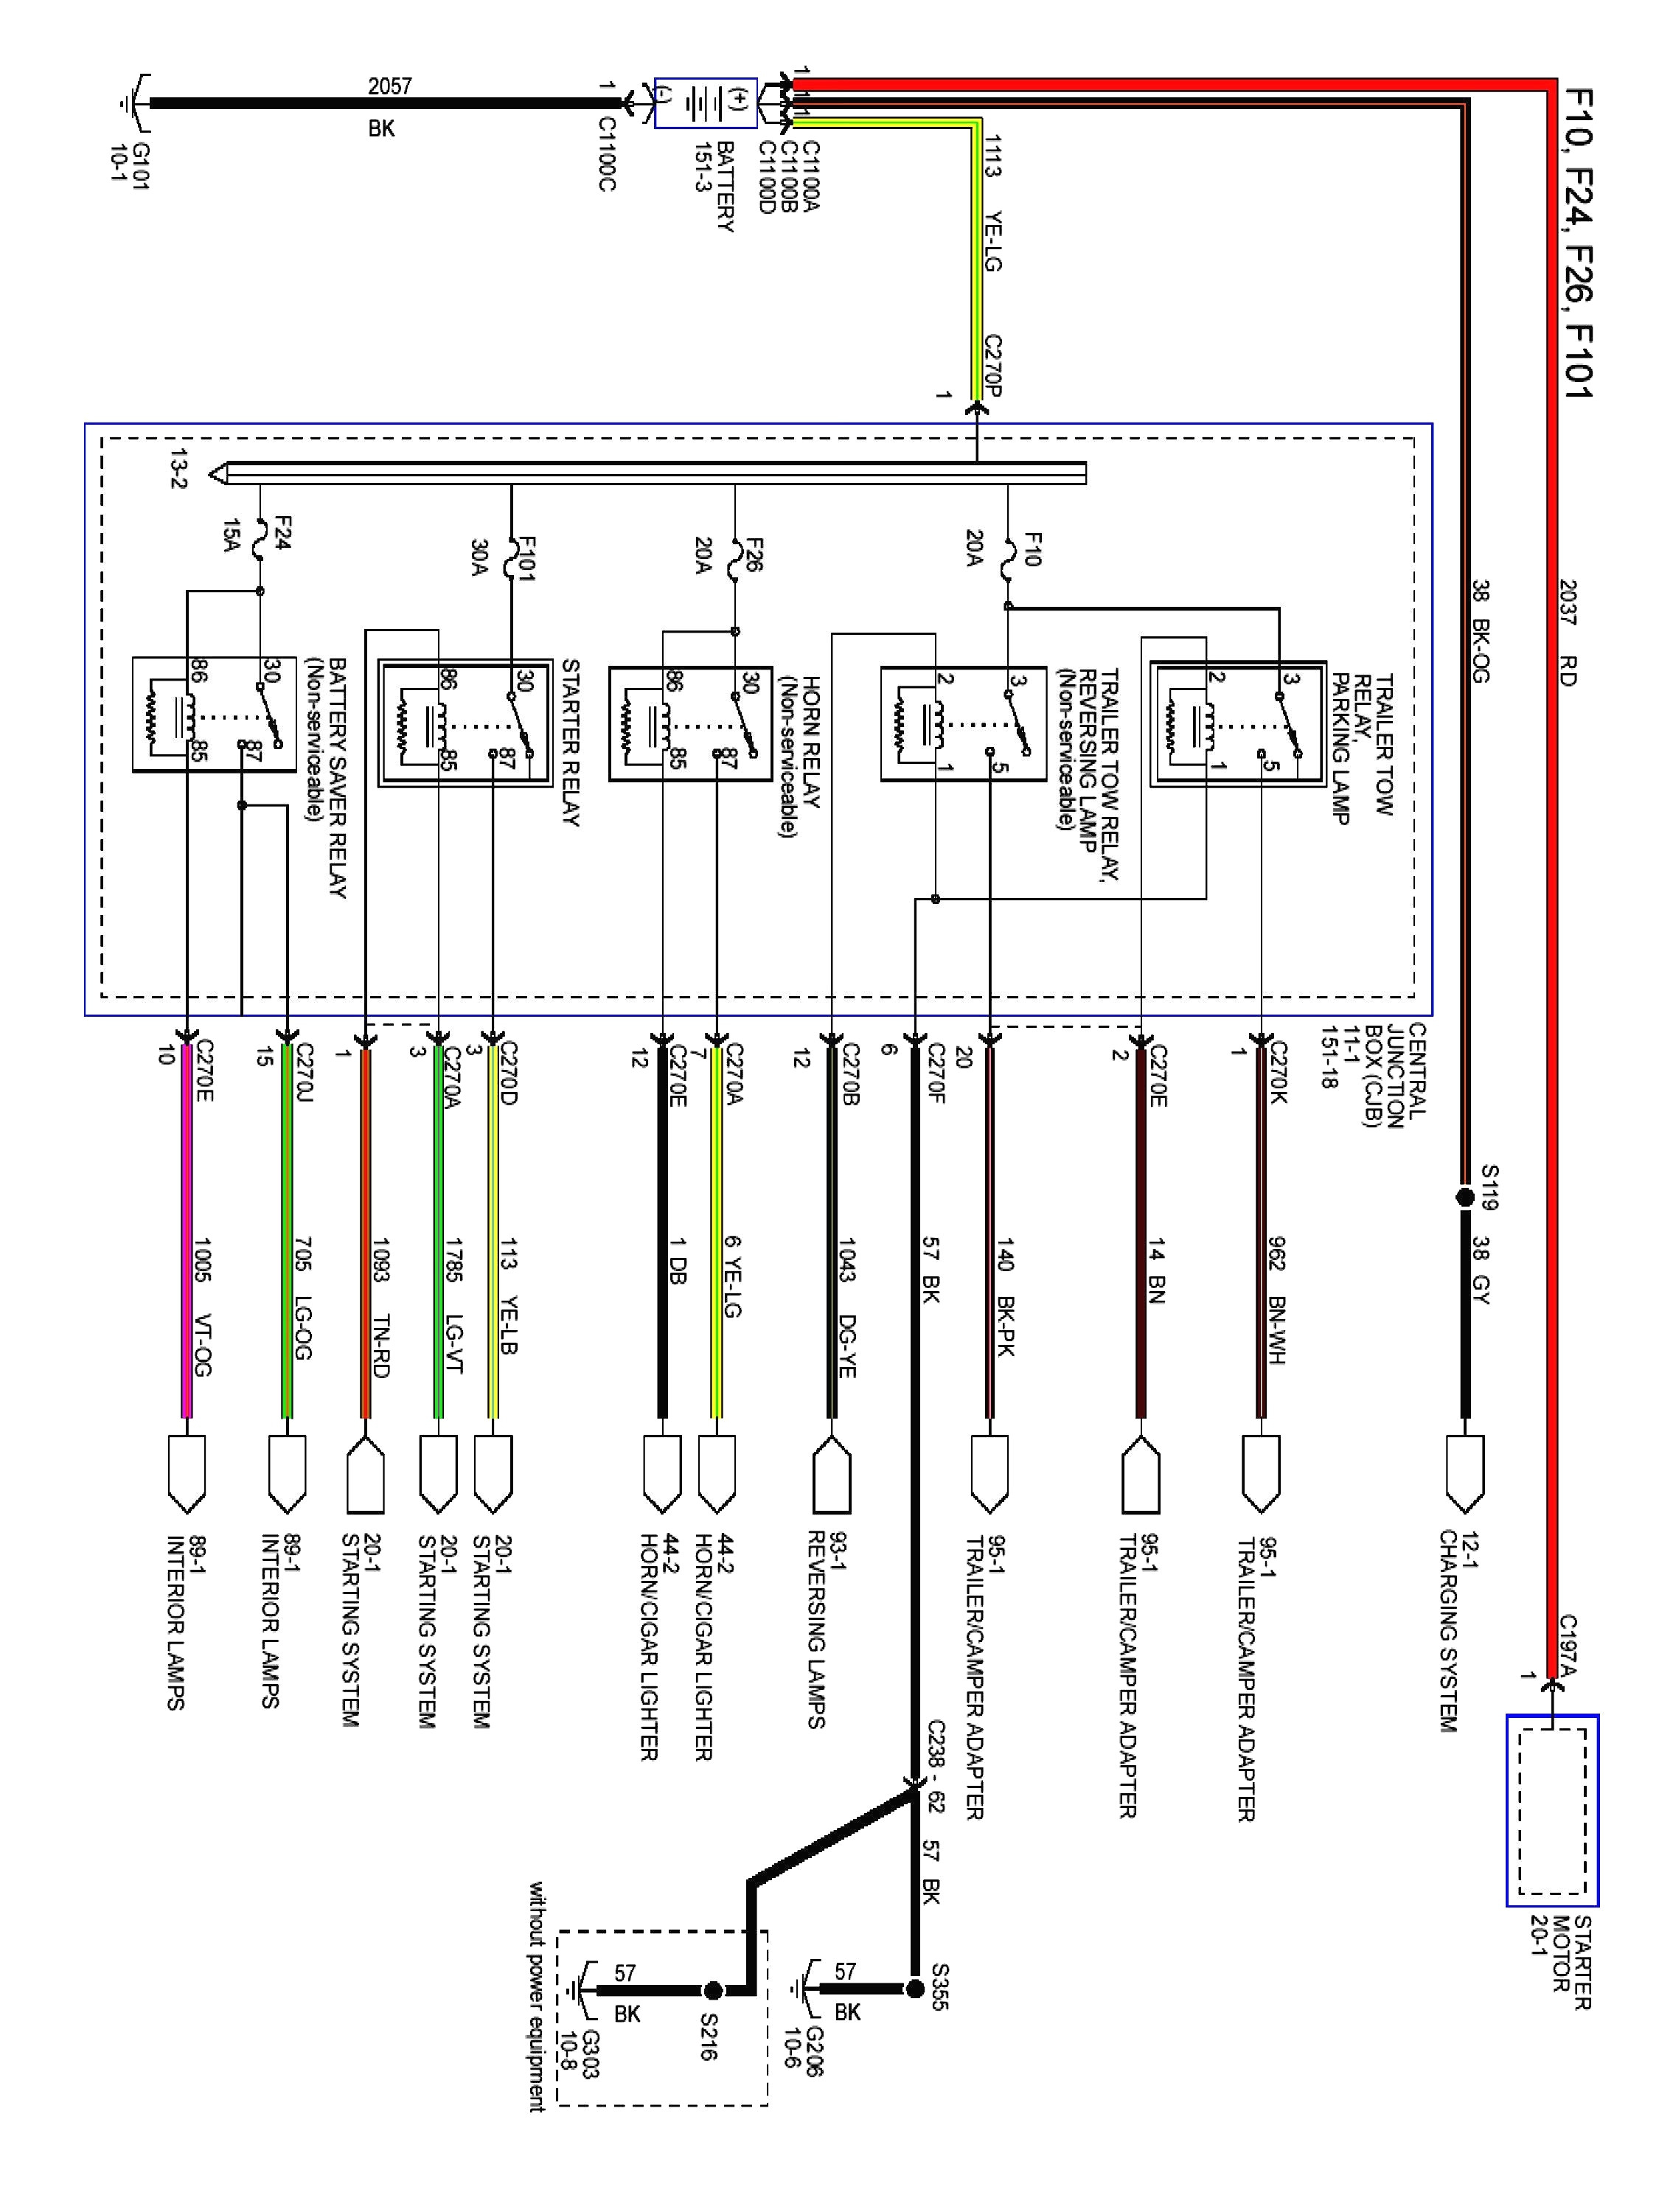 97 jetta wiring diagram wiring diagram technic 2000 jetta cruise control wiring diagram free download